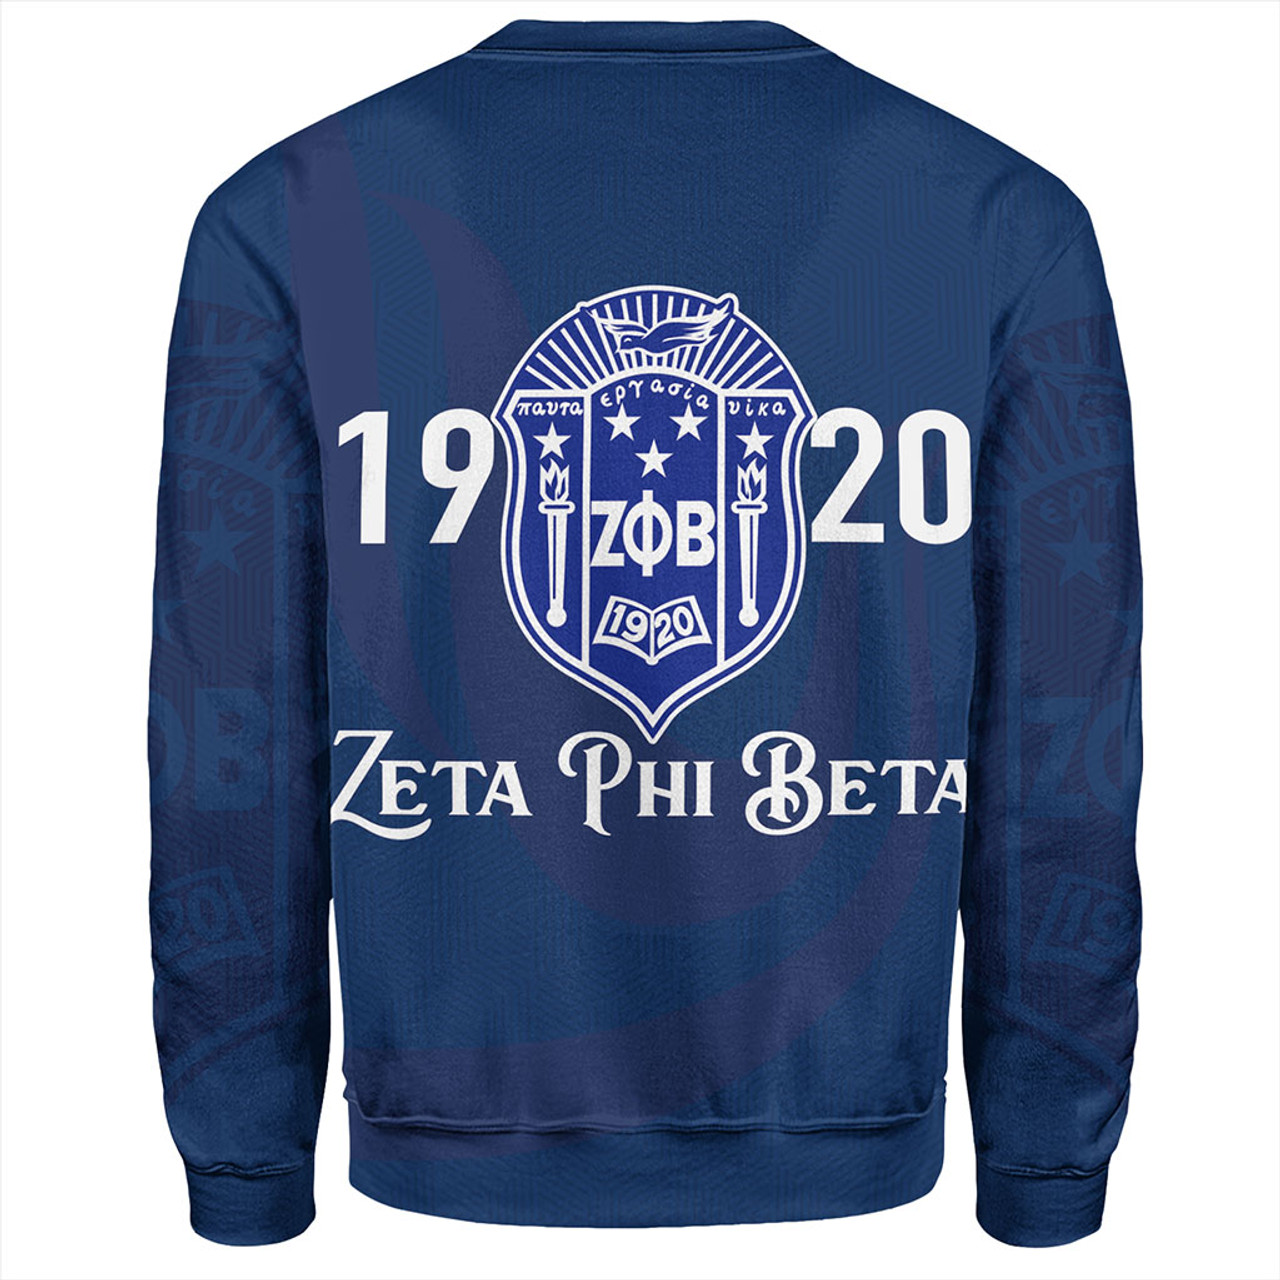 Zeta Phi Beta Sweatshirt Finer Sorority